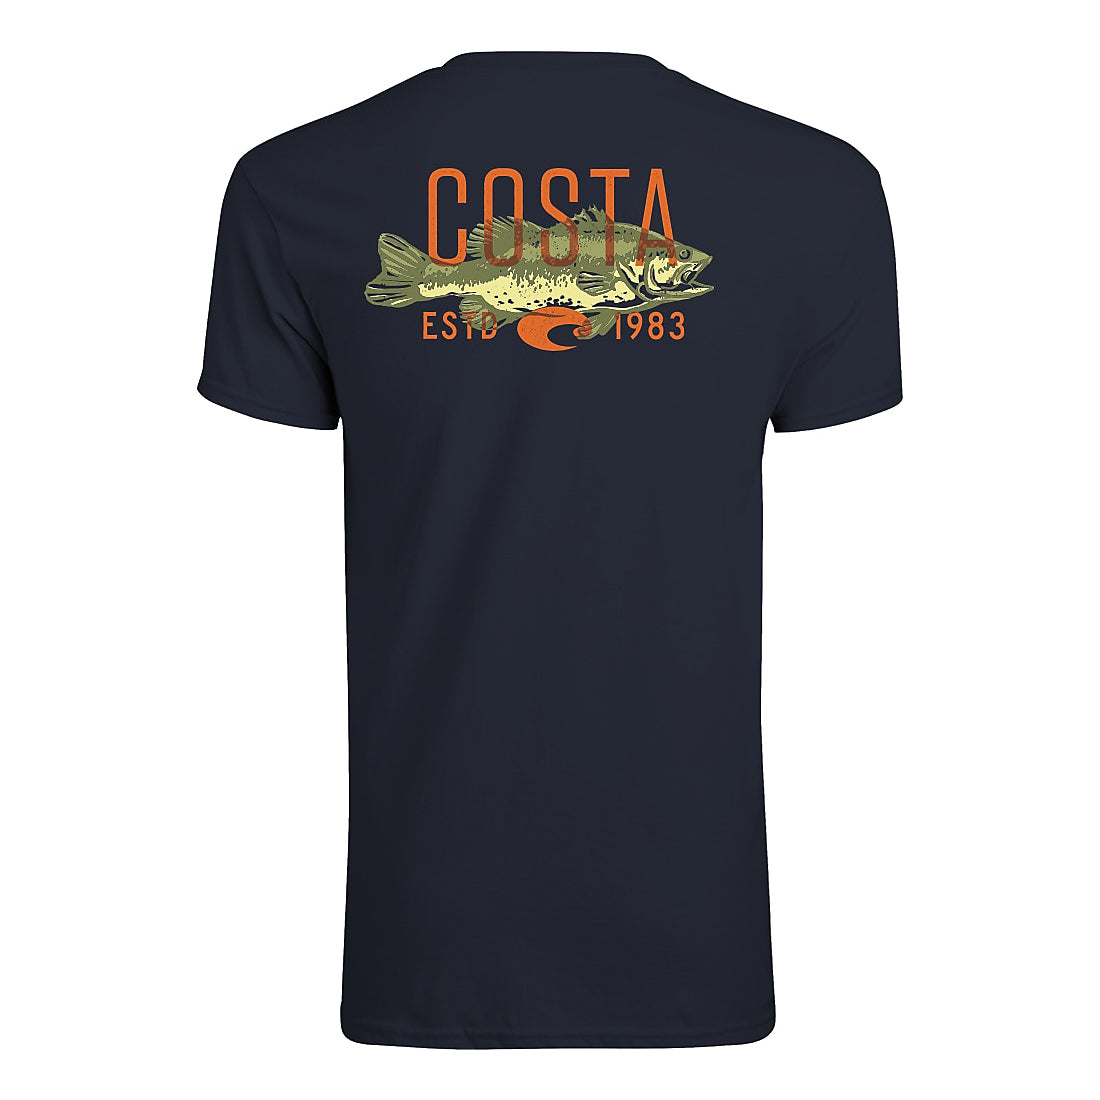 Costa Men's Overlay Bass Short Sleeve T-Shirt from COSTA - CHAOS Fishing